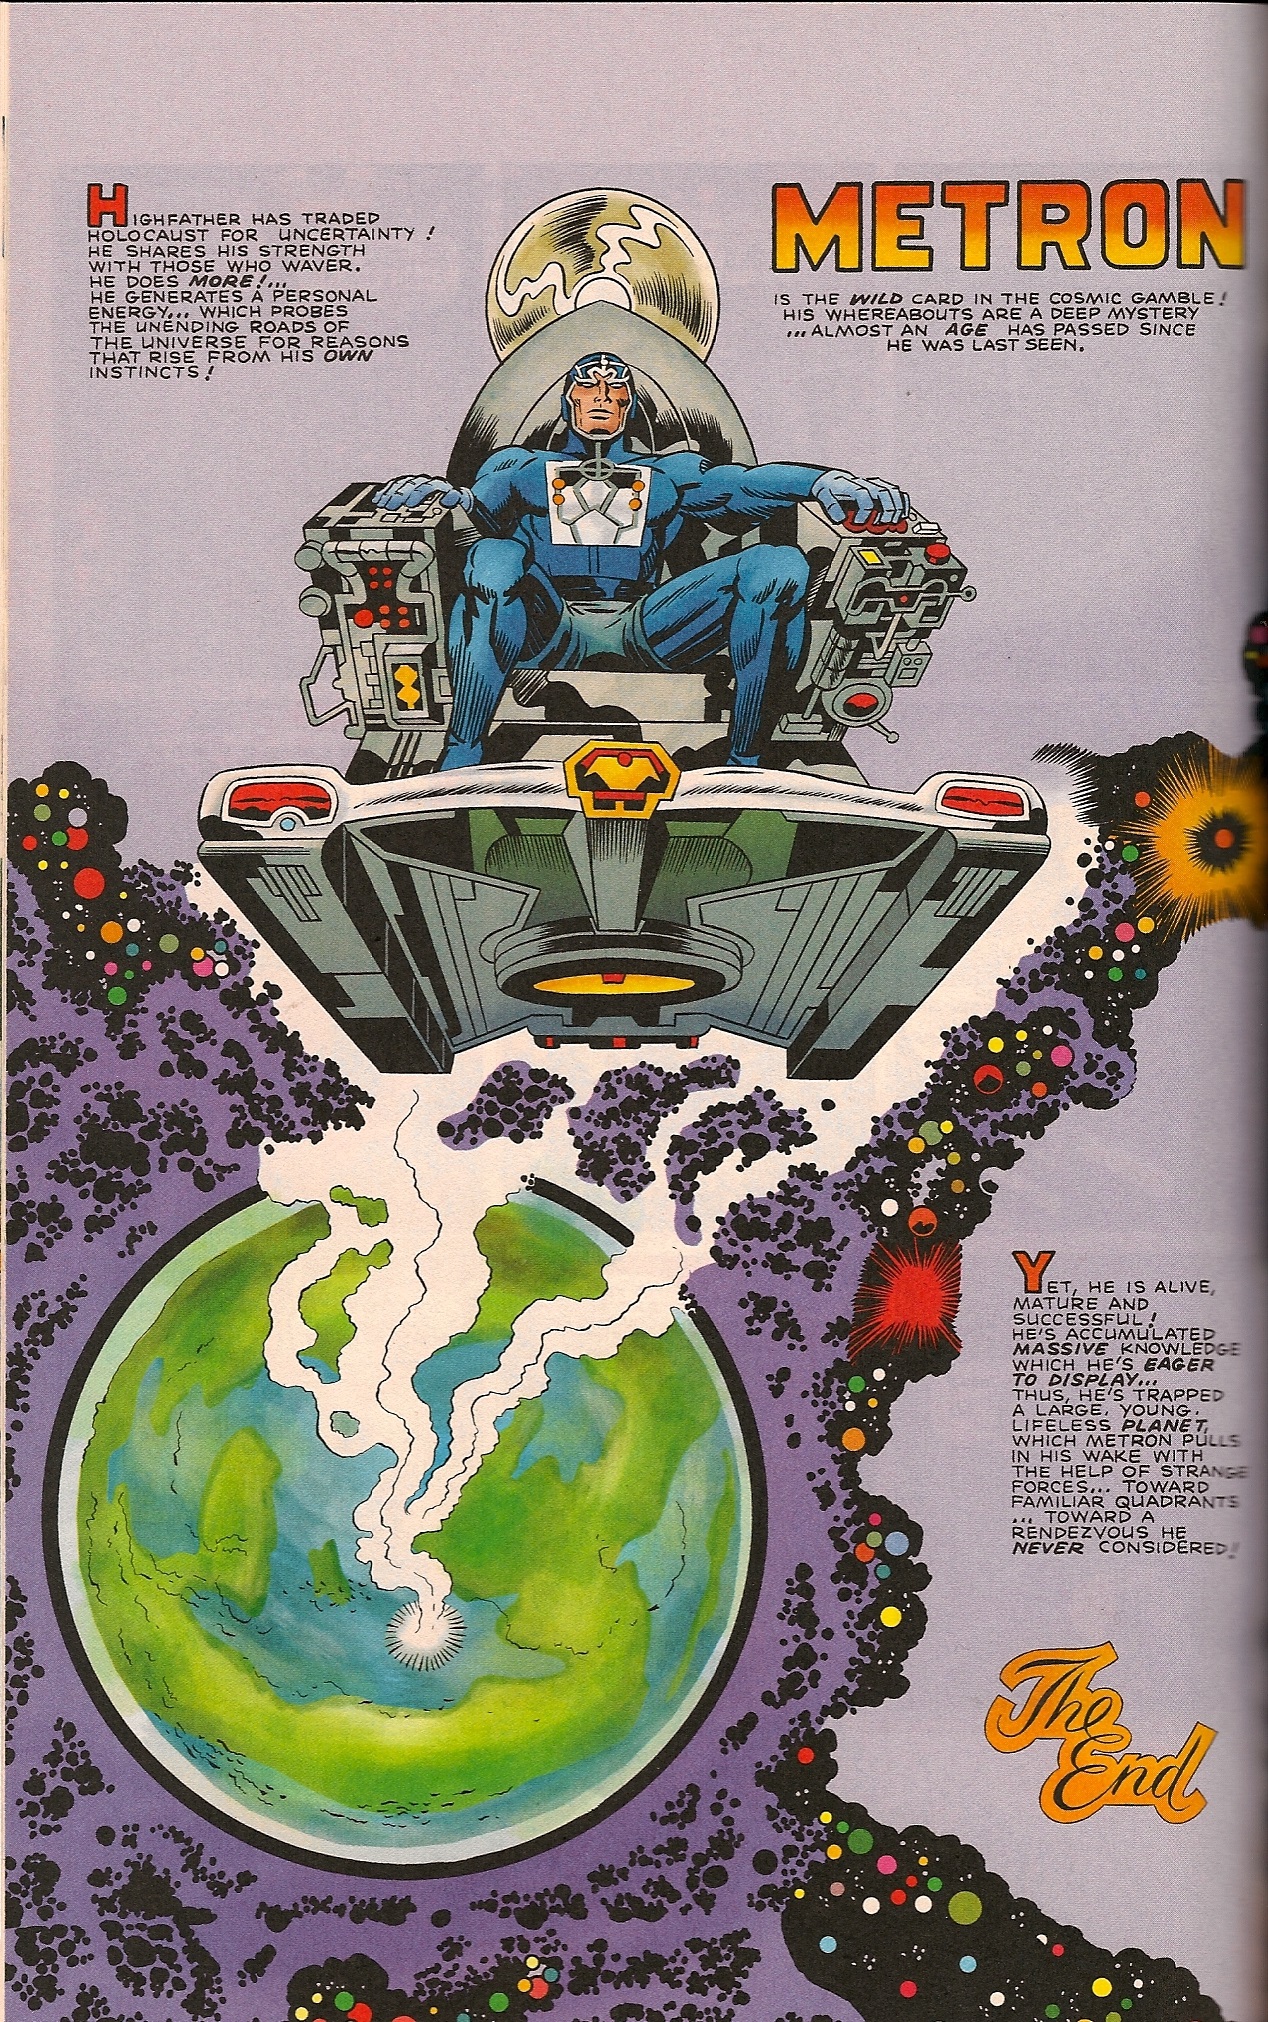 Jack Kirby's "Metron," from DC Comics, 1971.